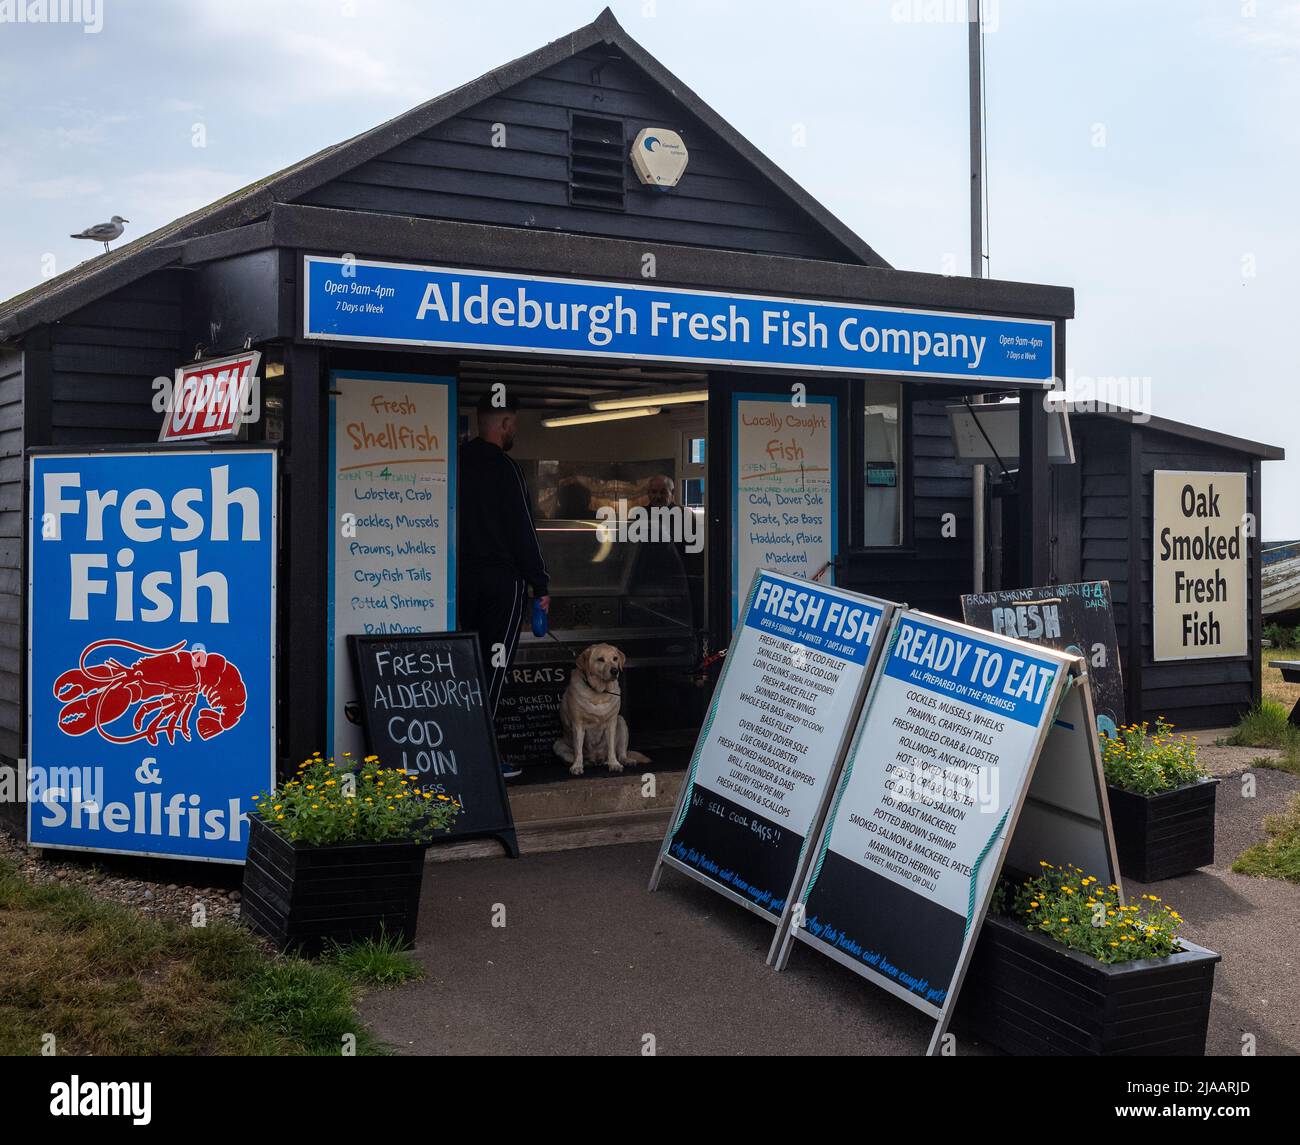 Aldeburgh Fresh Fish Shop Stock Photo